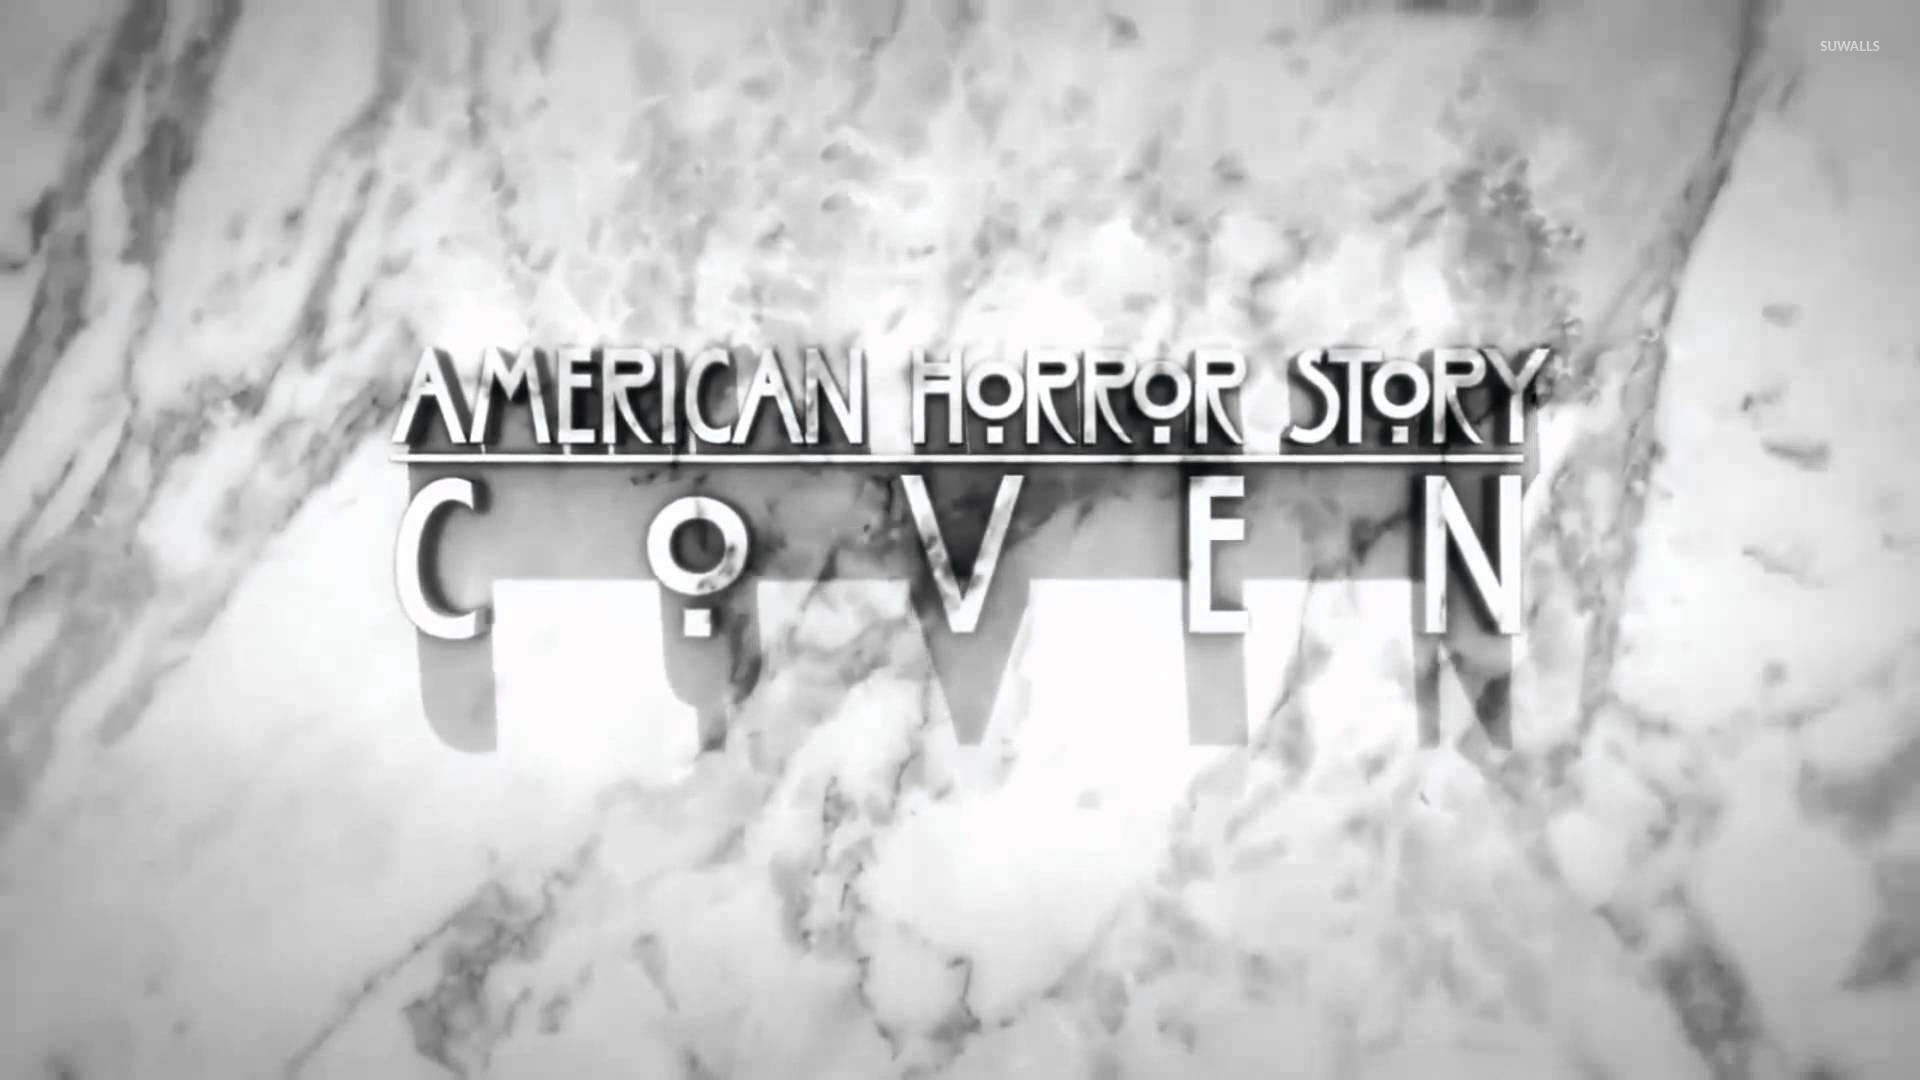 1920x1080 American Horror Story - Coven wallpaper